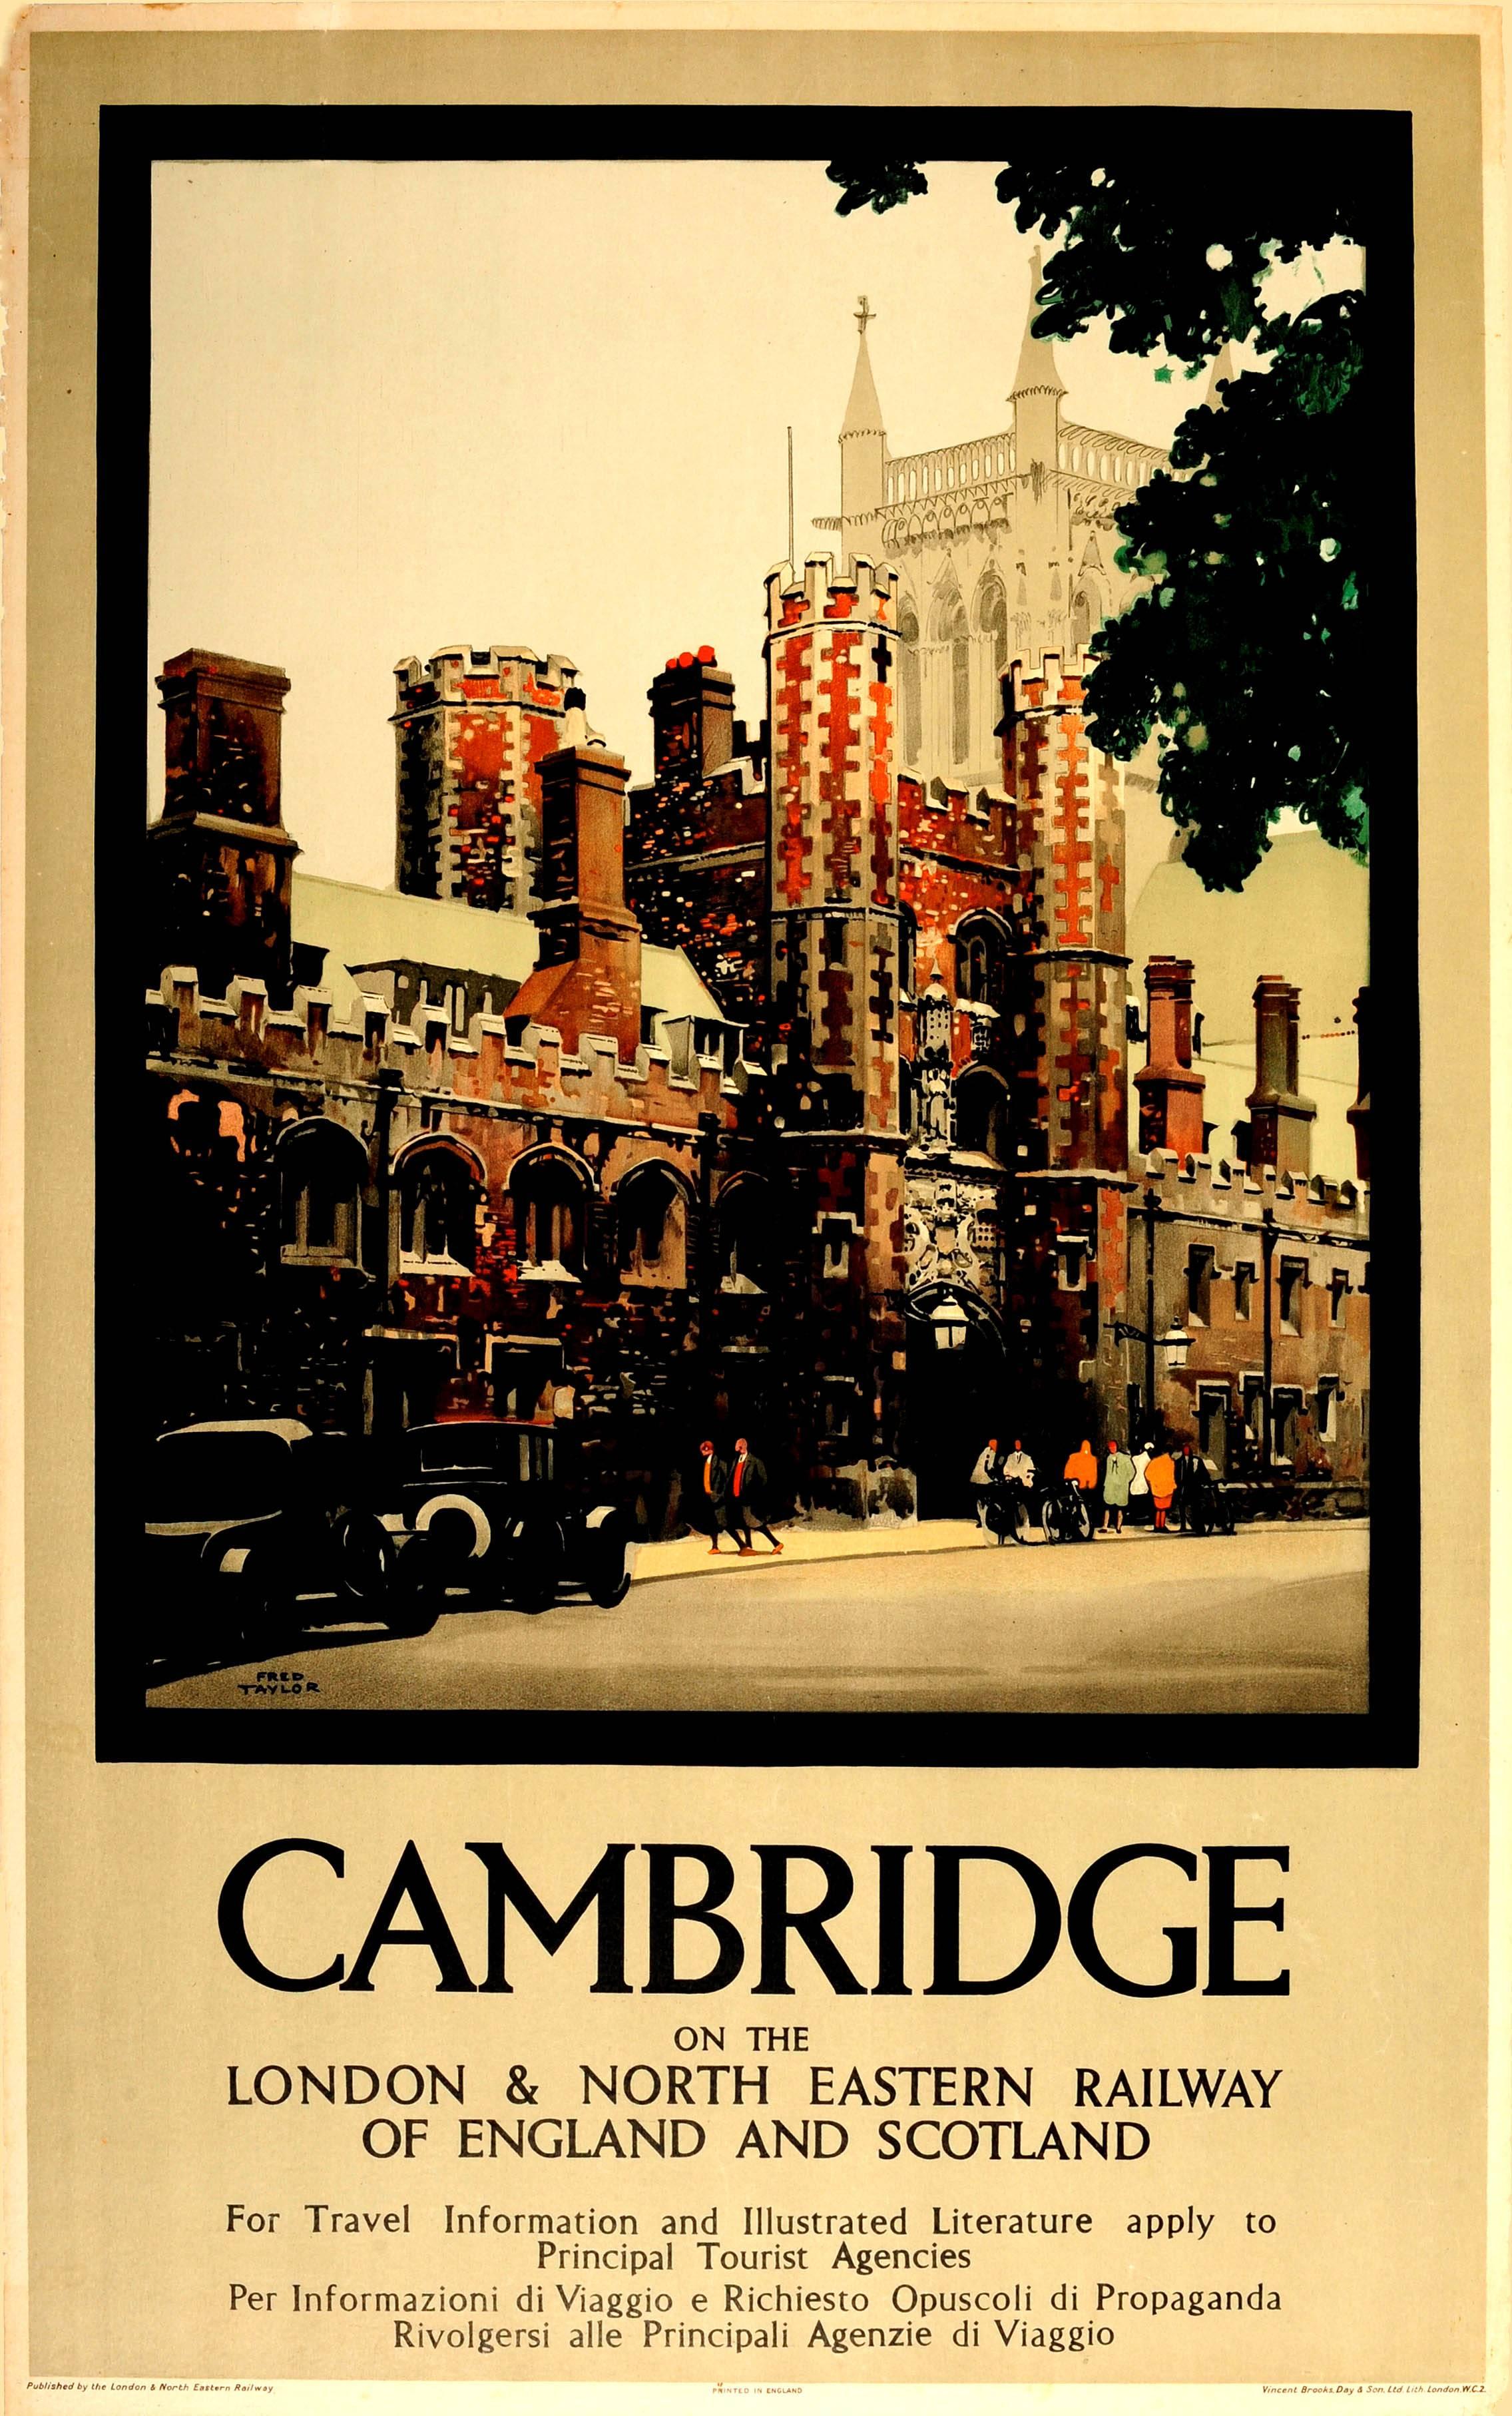 Fred Taylor Print - Original London & North Eastern Railway LNER Travel Poster Advertising Cambridge